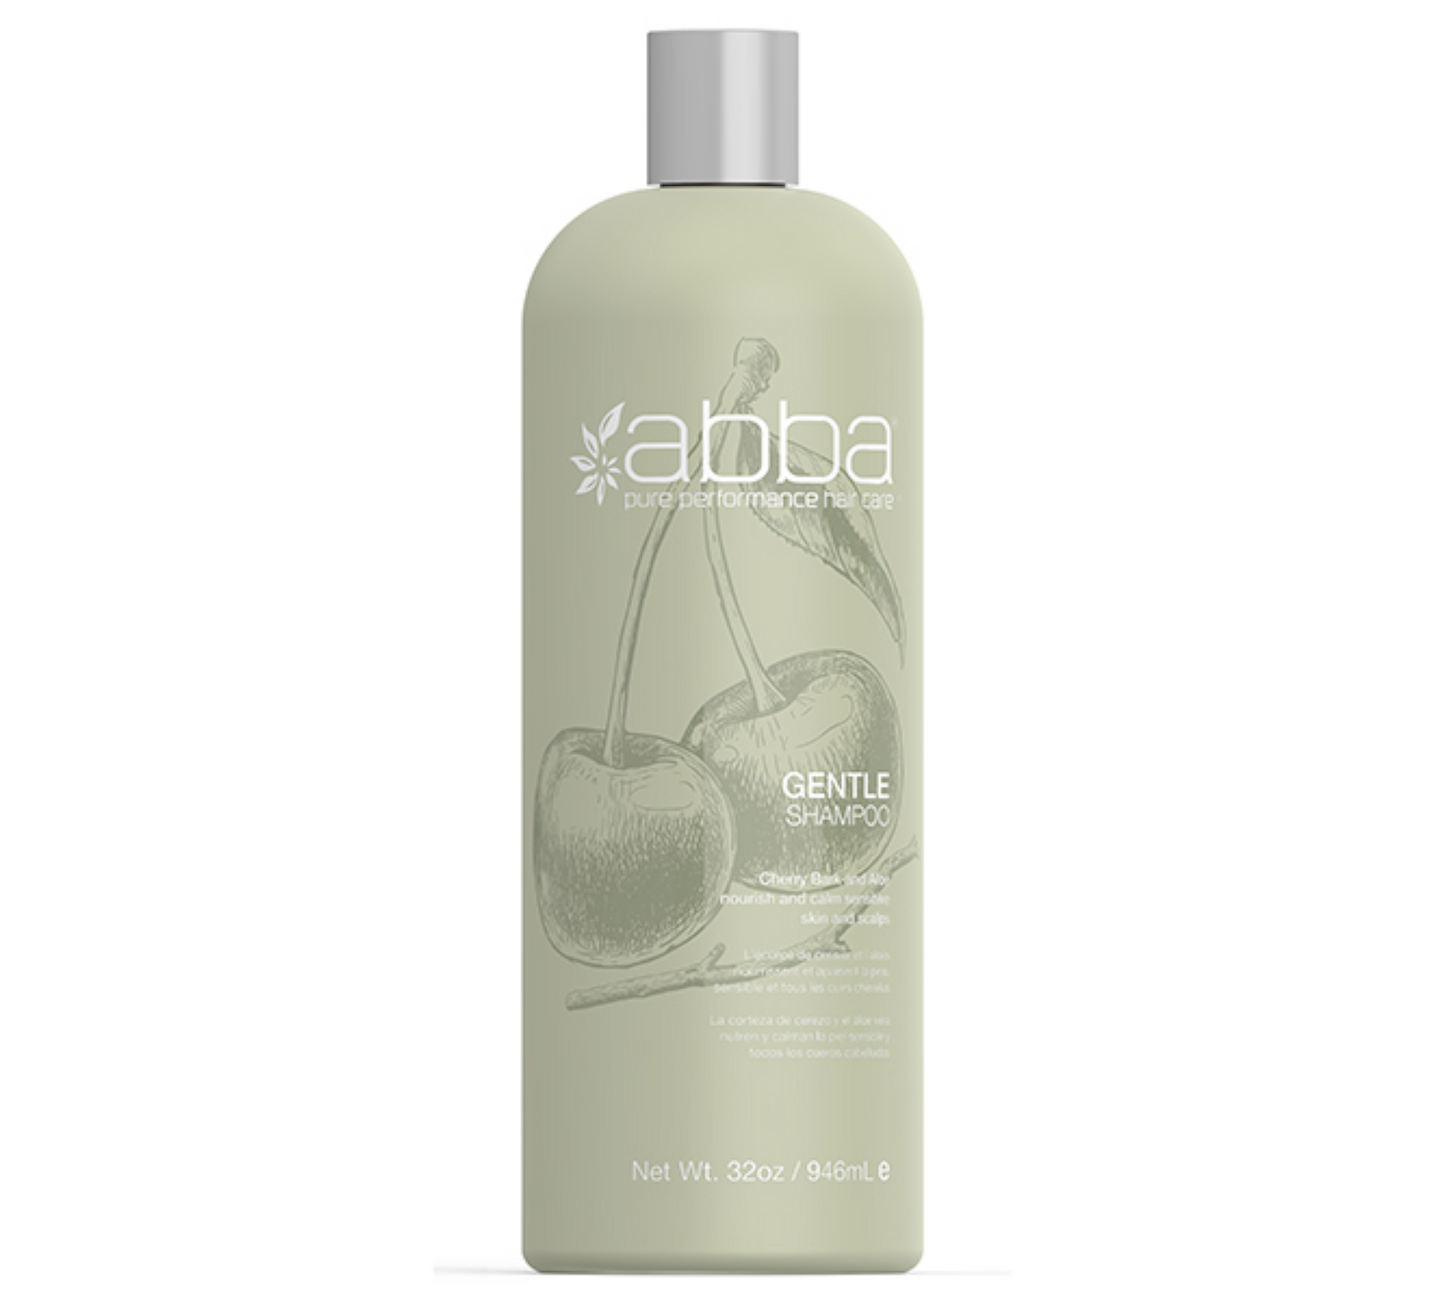 Abba Gentle Shampoo, 32 oz